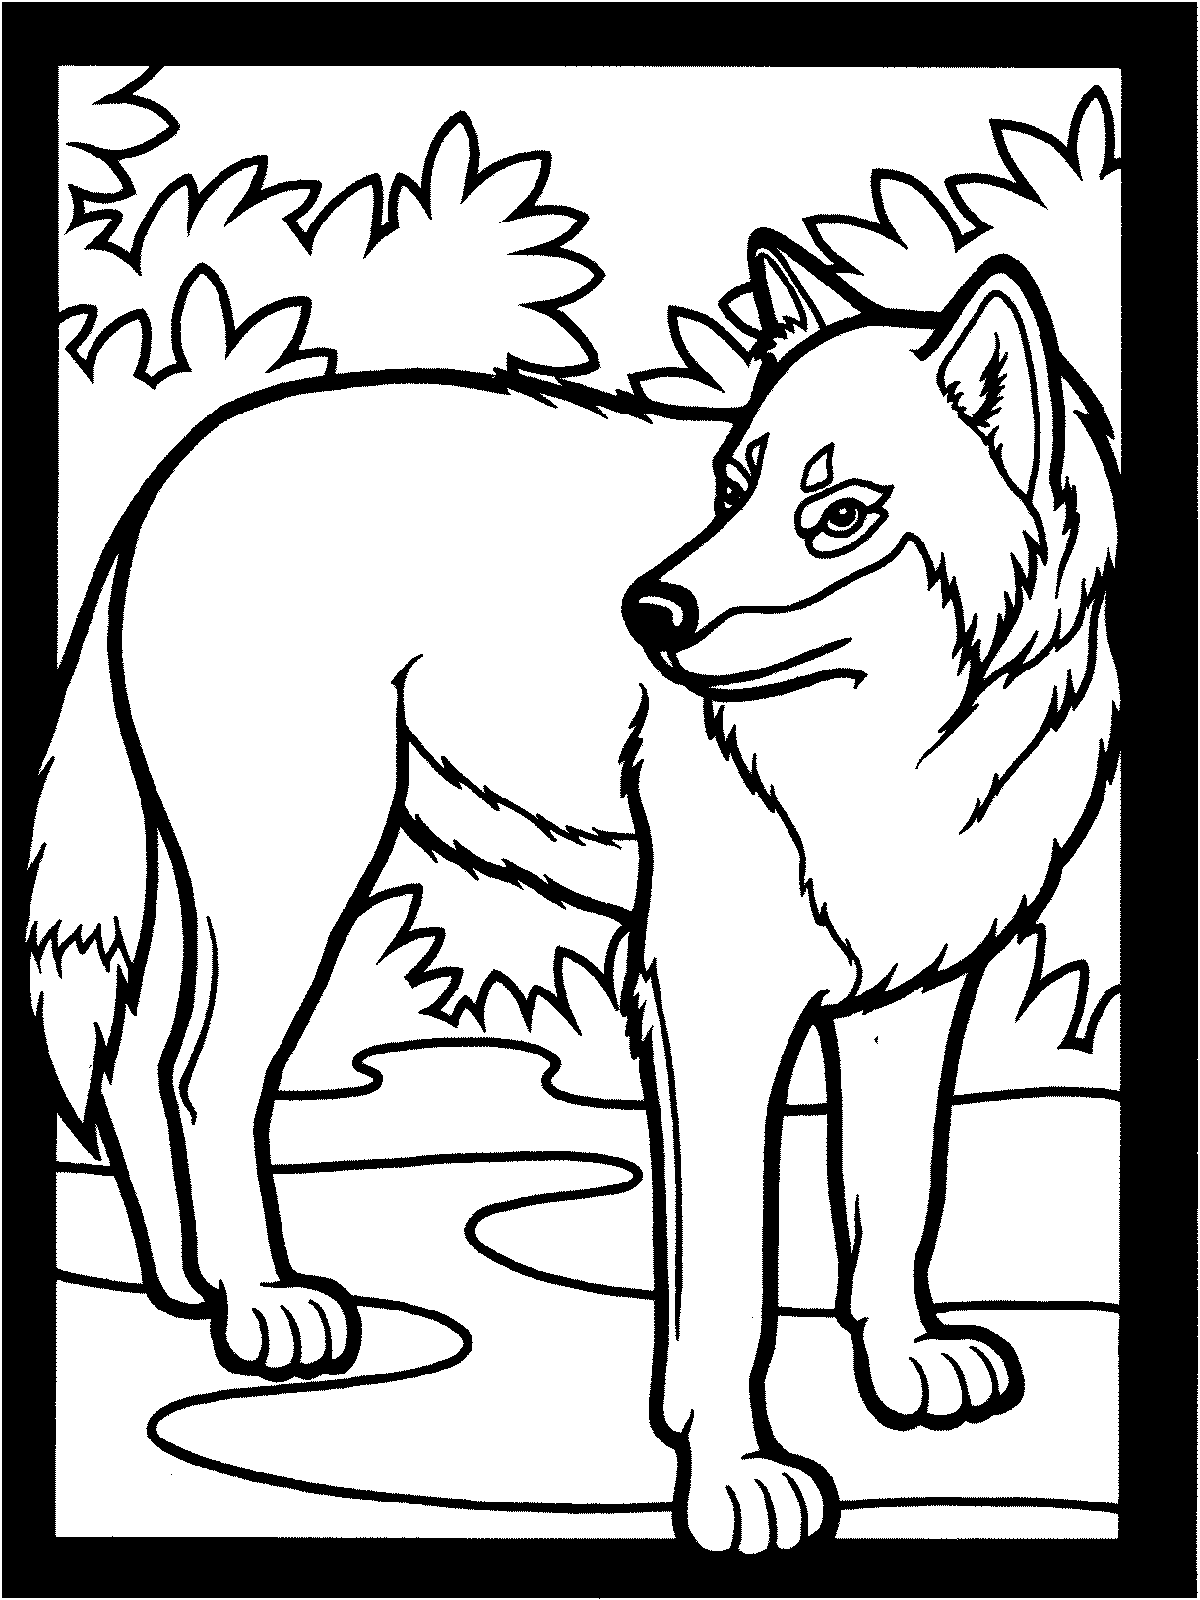 Desenhos de Wolfoo 1 para Colorir e Imprimir 